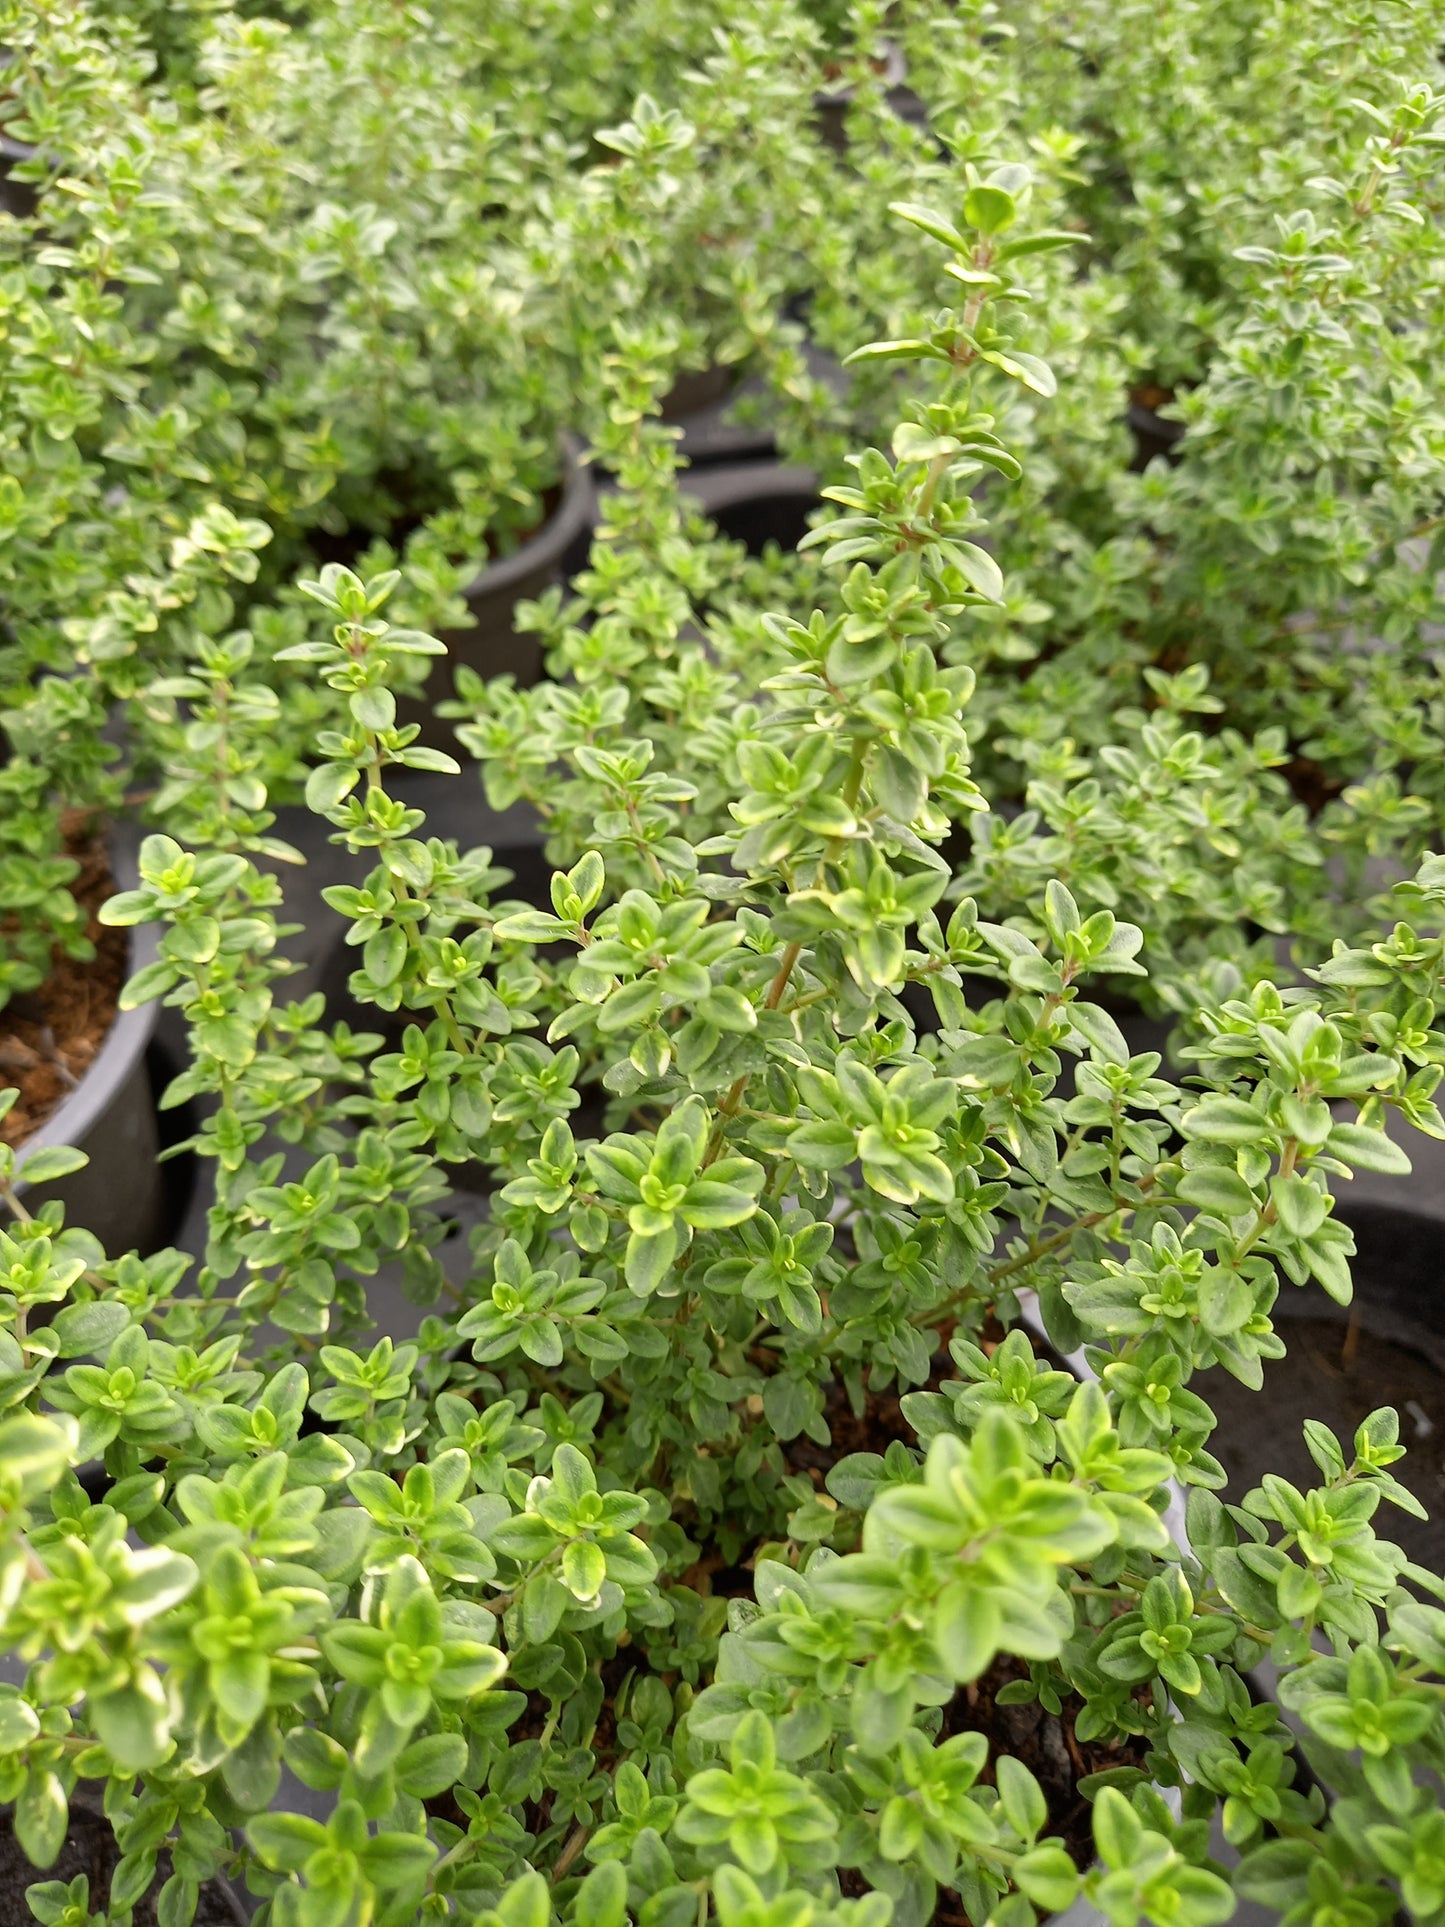 Bio Zitronenthymian "golden king" (Thymus x citriodorus) - Topfpflanze